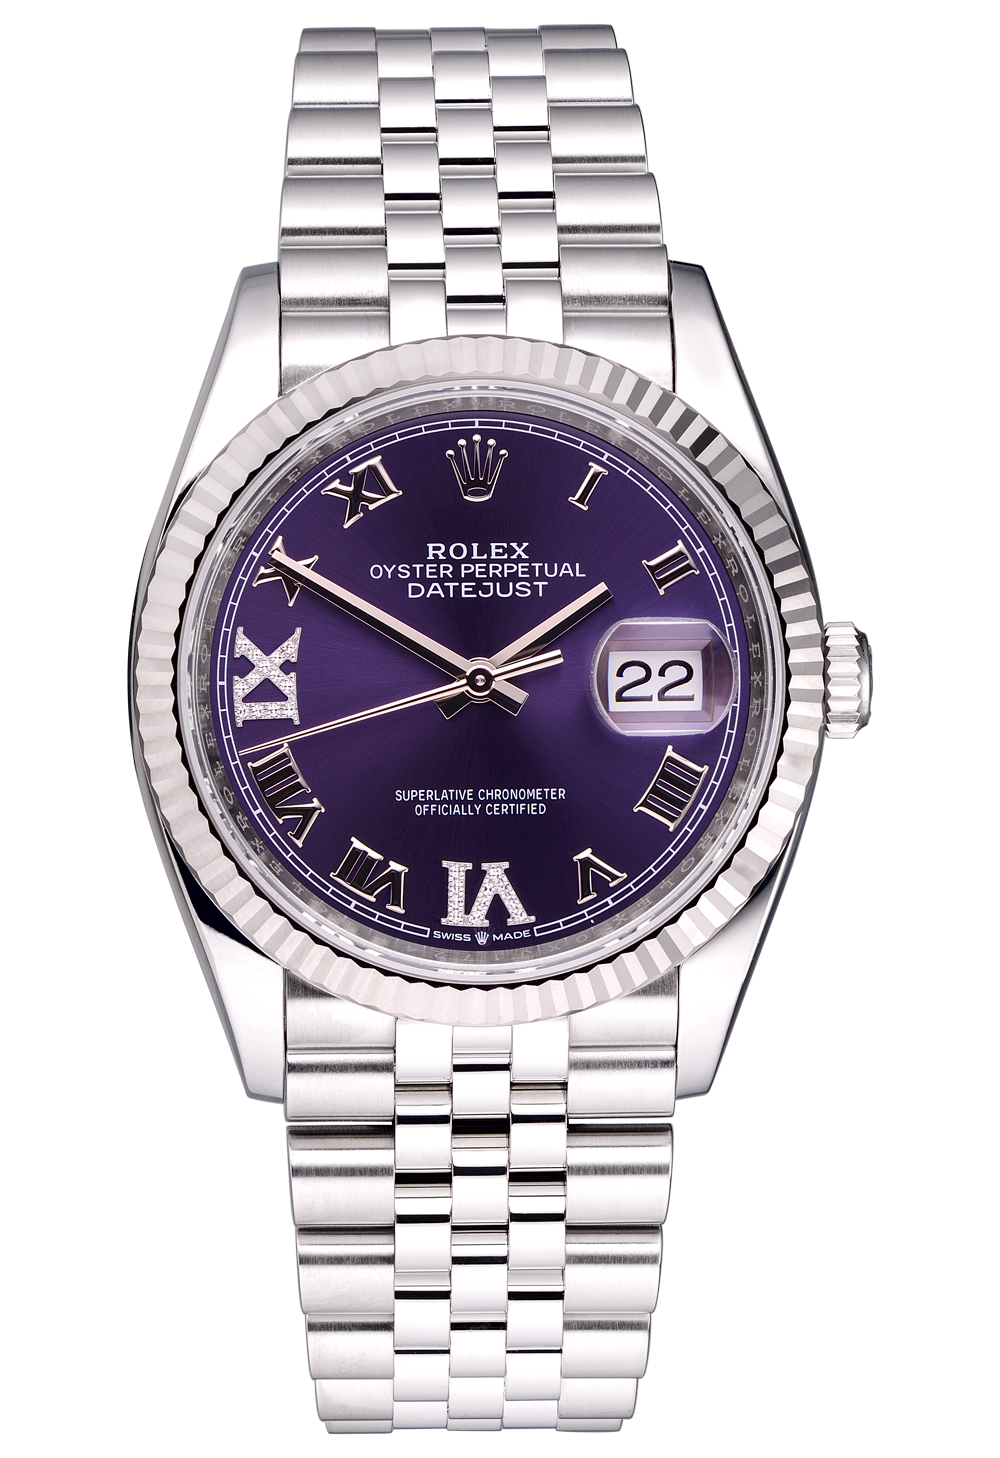 Rolex Datejust 36mm Steel and White Gold Purple Diamond Roman Dial 126234